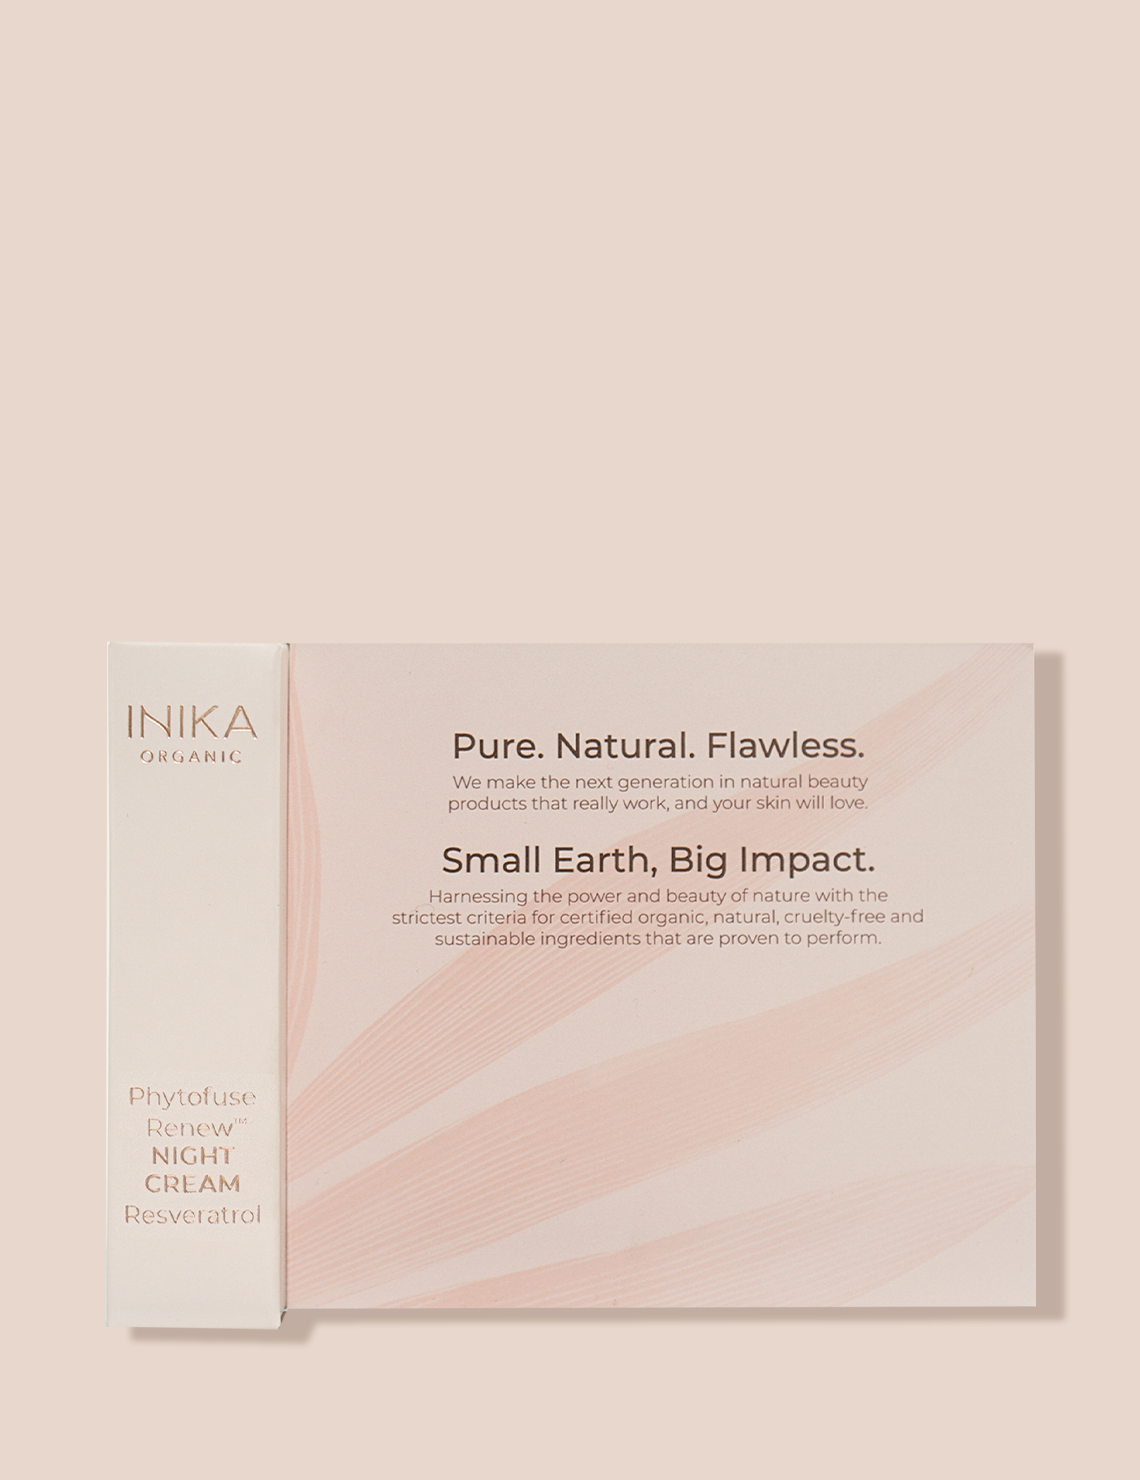 INIKA Organic Phytofuse Renew Night Cream 4ml (Boxed)